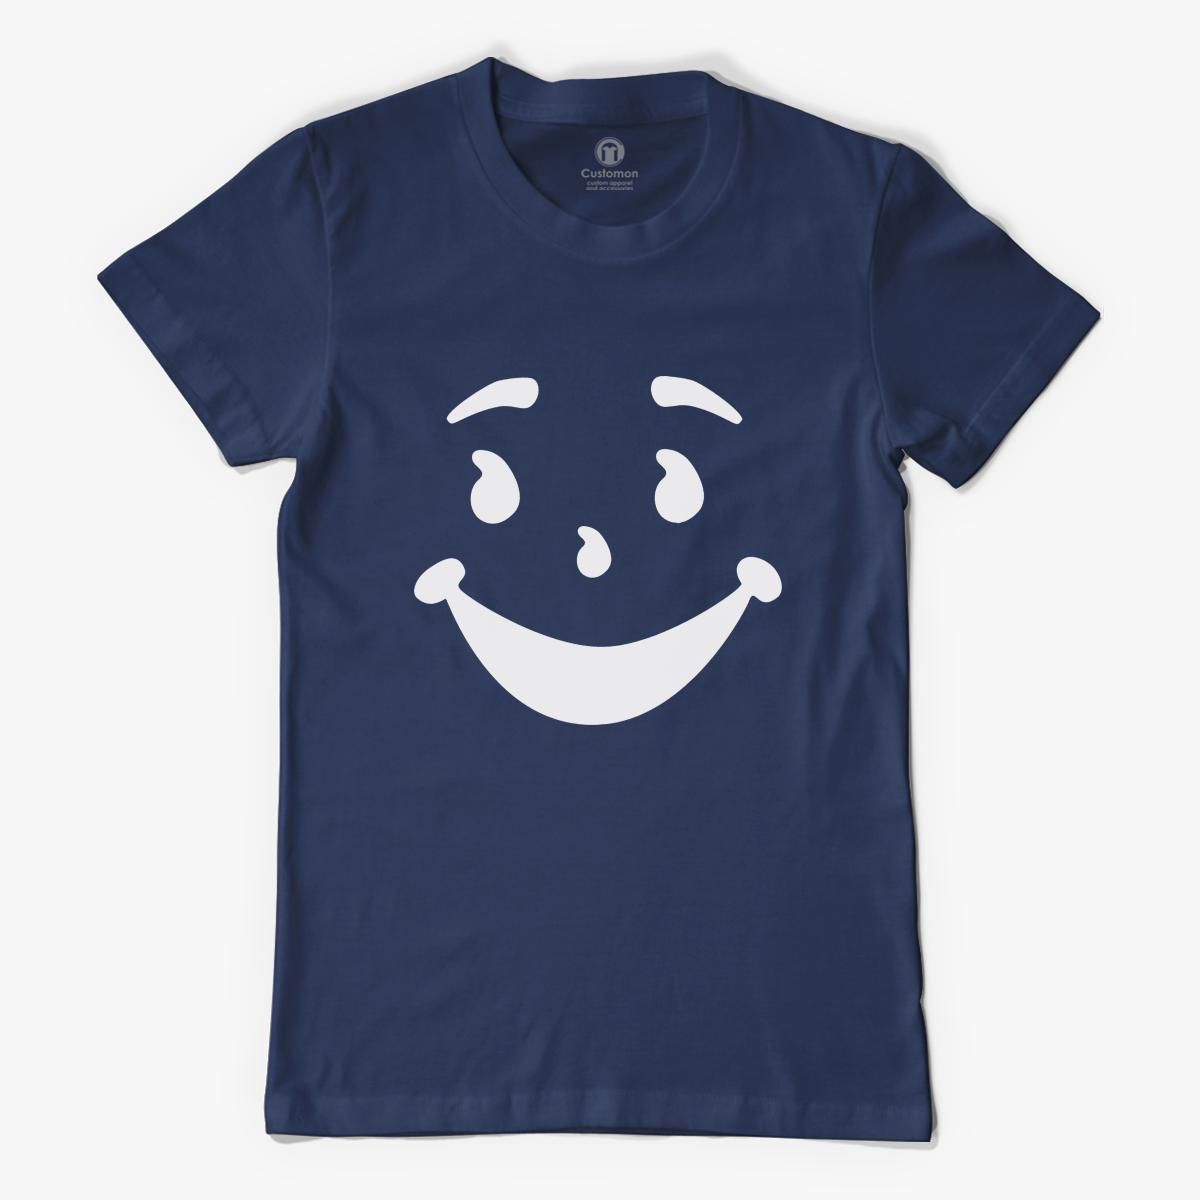 kool-aid man Face Women's T-shirt - Customon
 Kool Aid Shirt